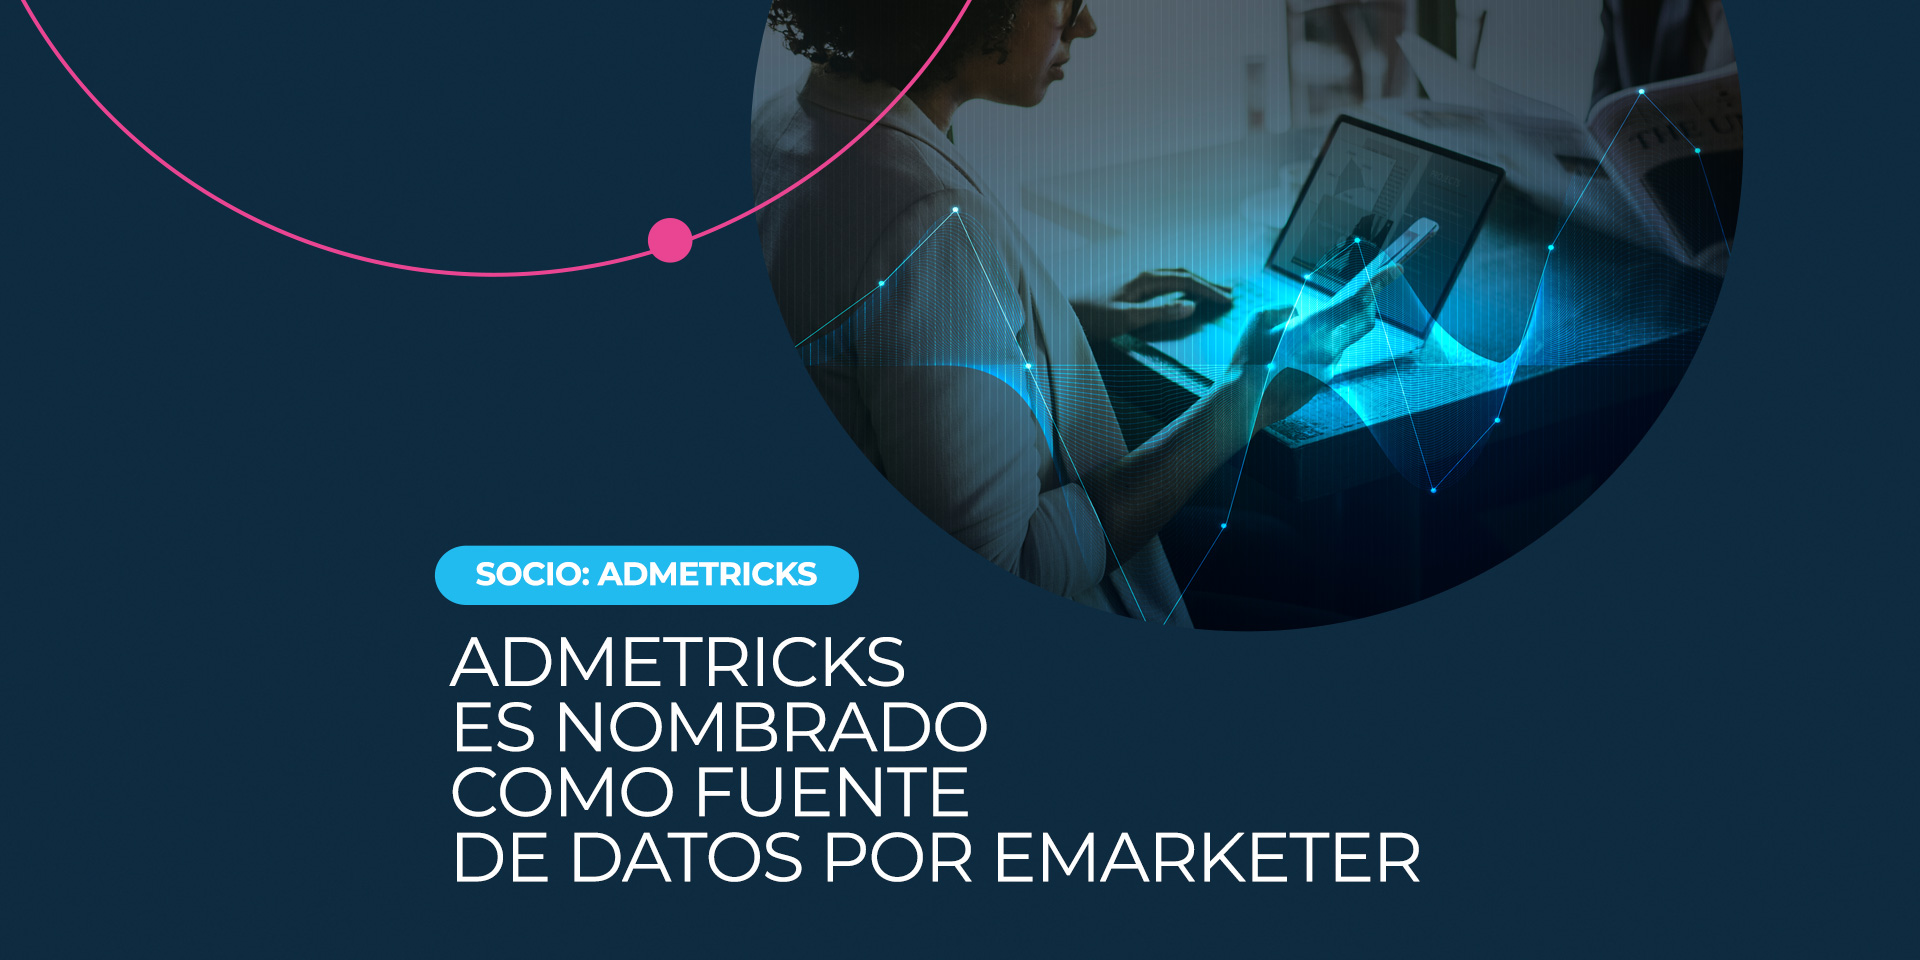 Admetricks es nombrado como fuente de datos por eMarketer